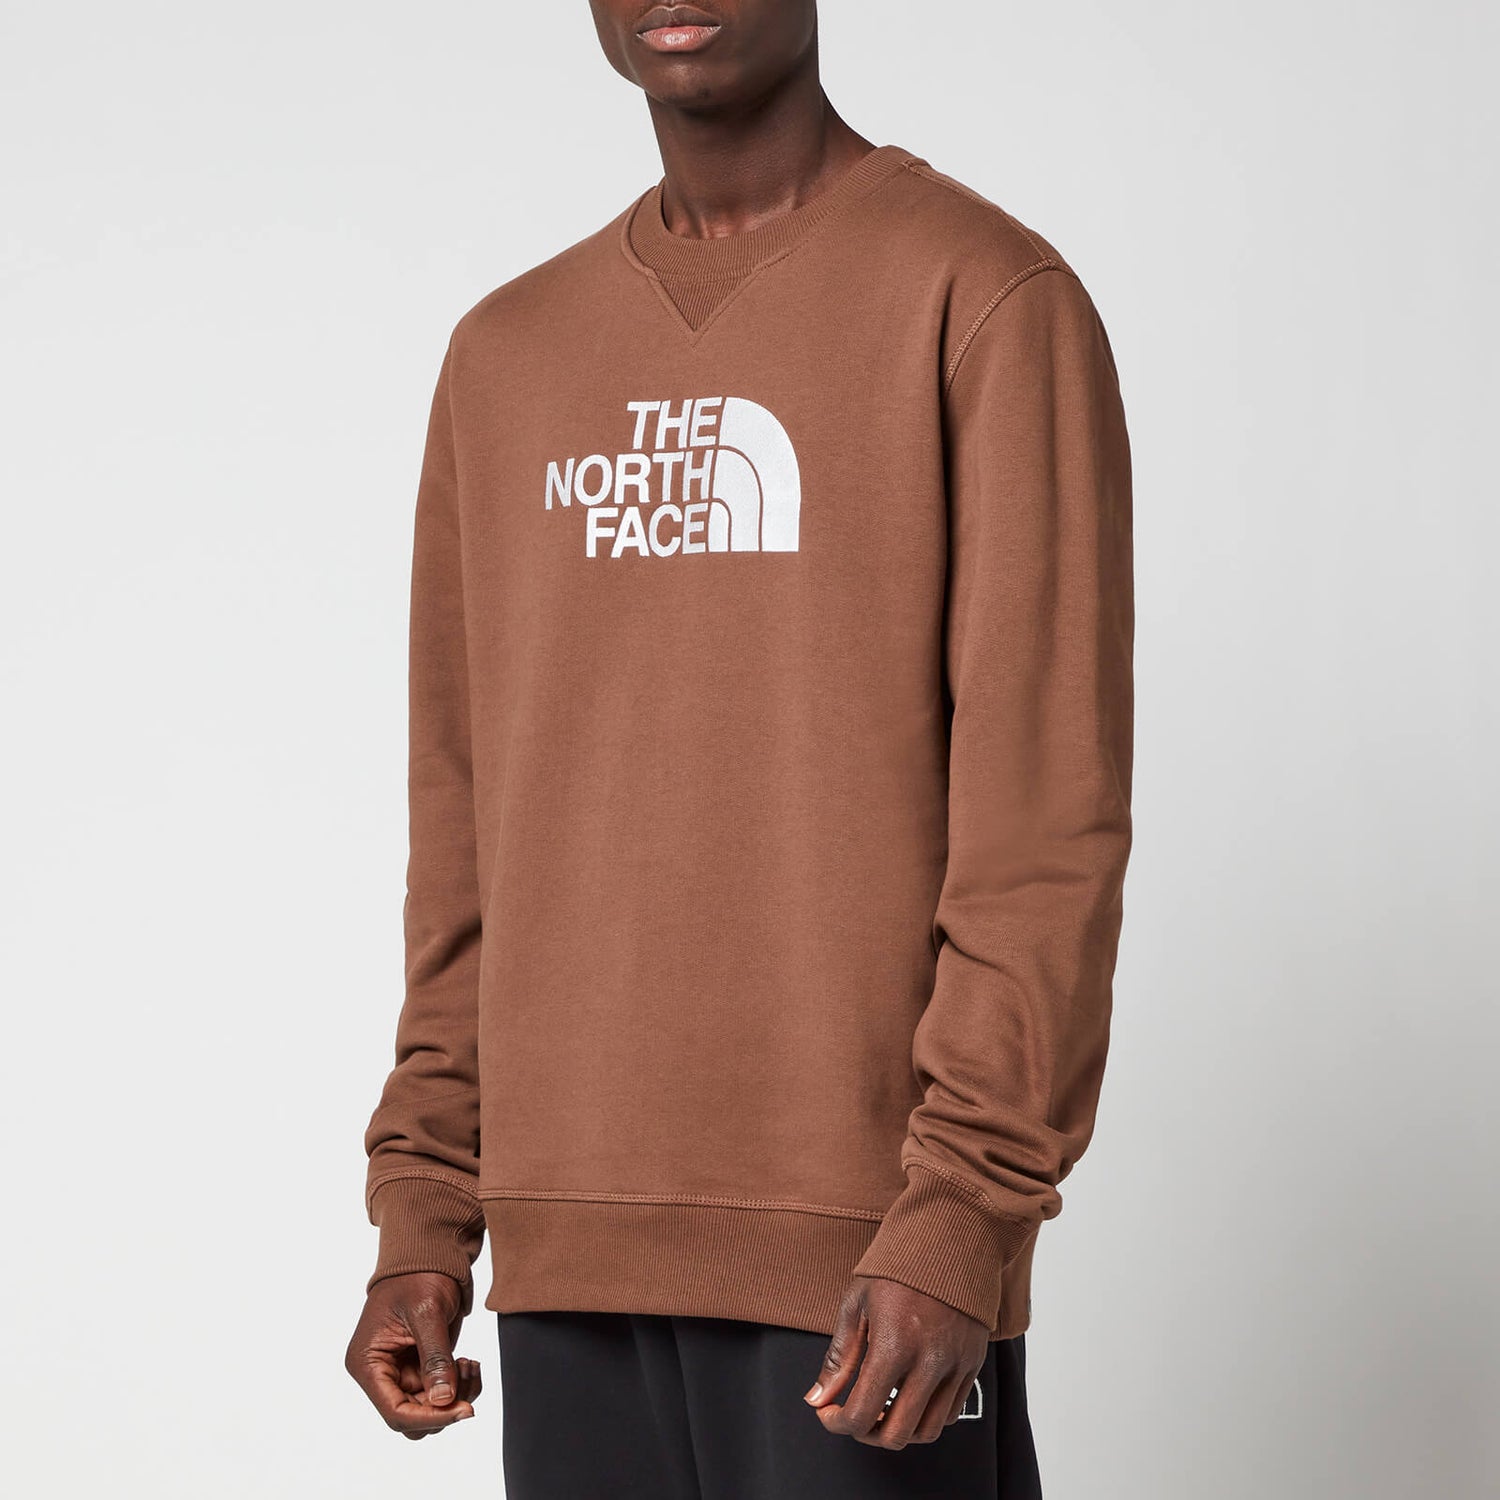 The North Face Men's Drew Peak Sweatshirt - Earth Brown - M